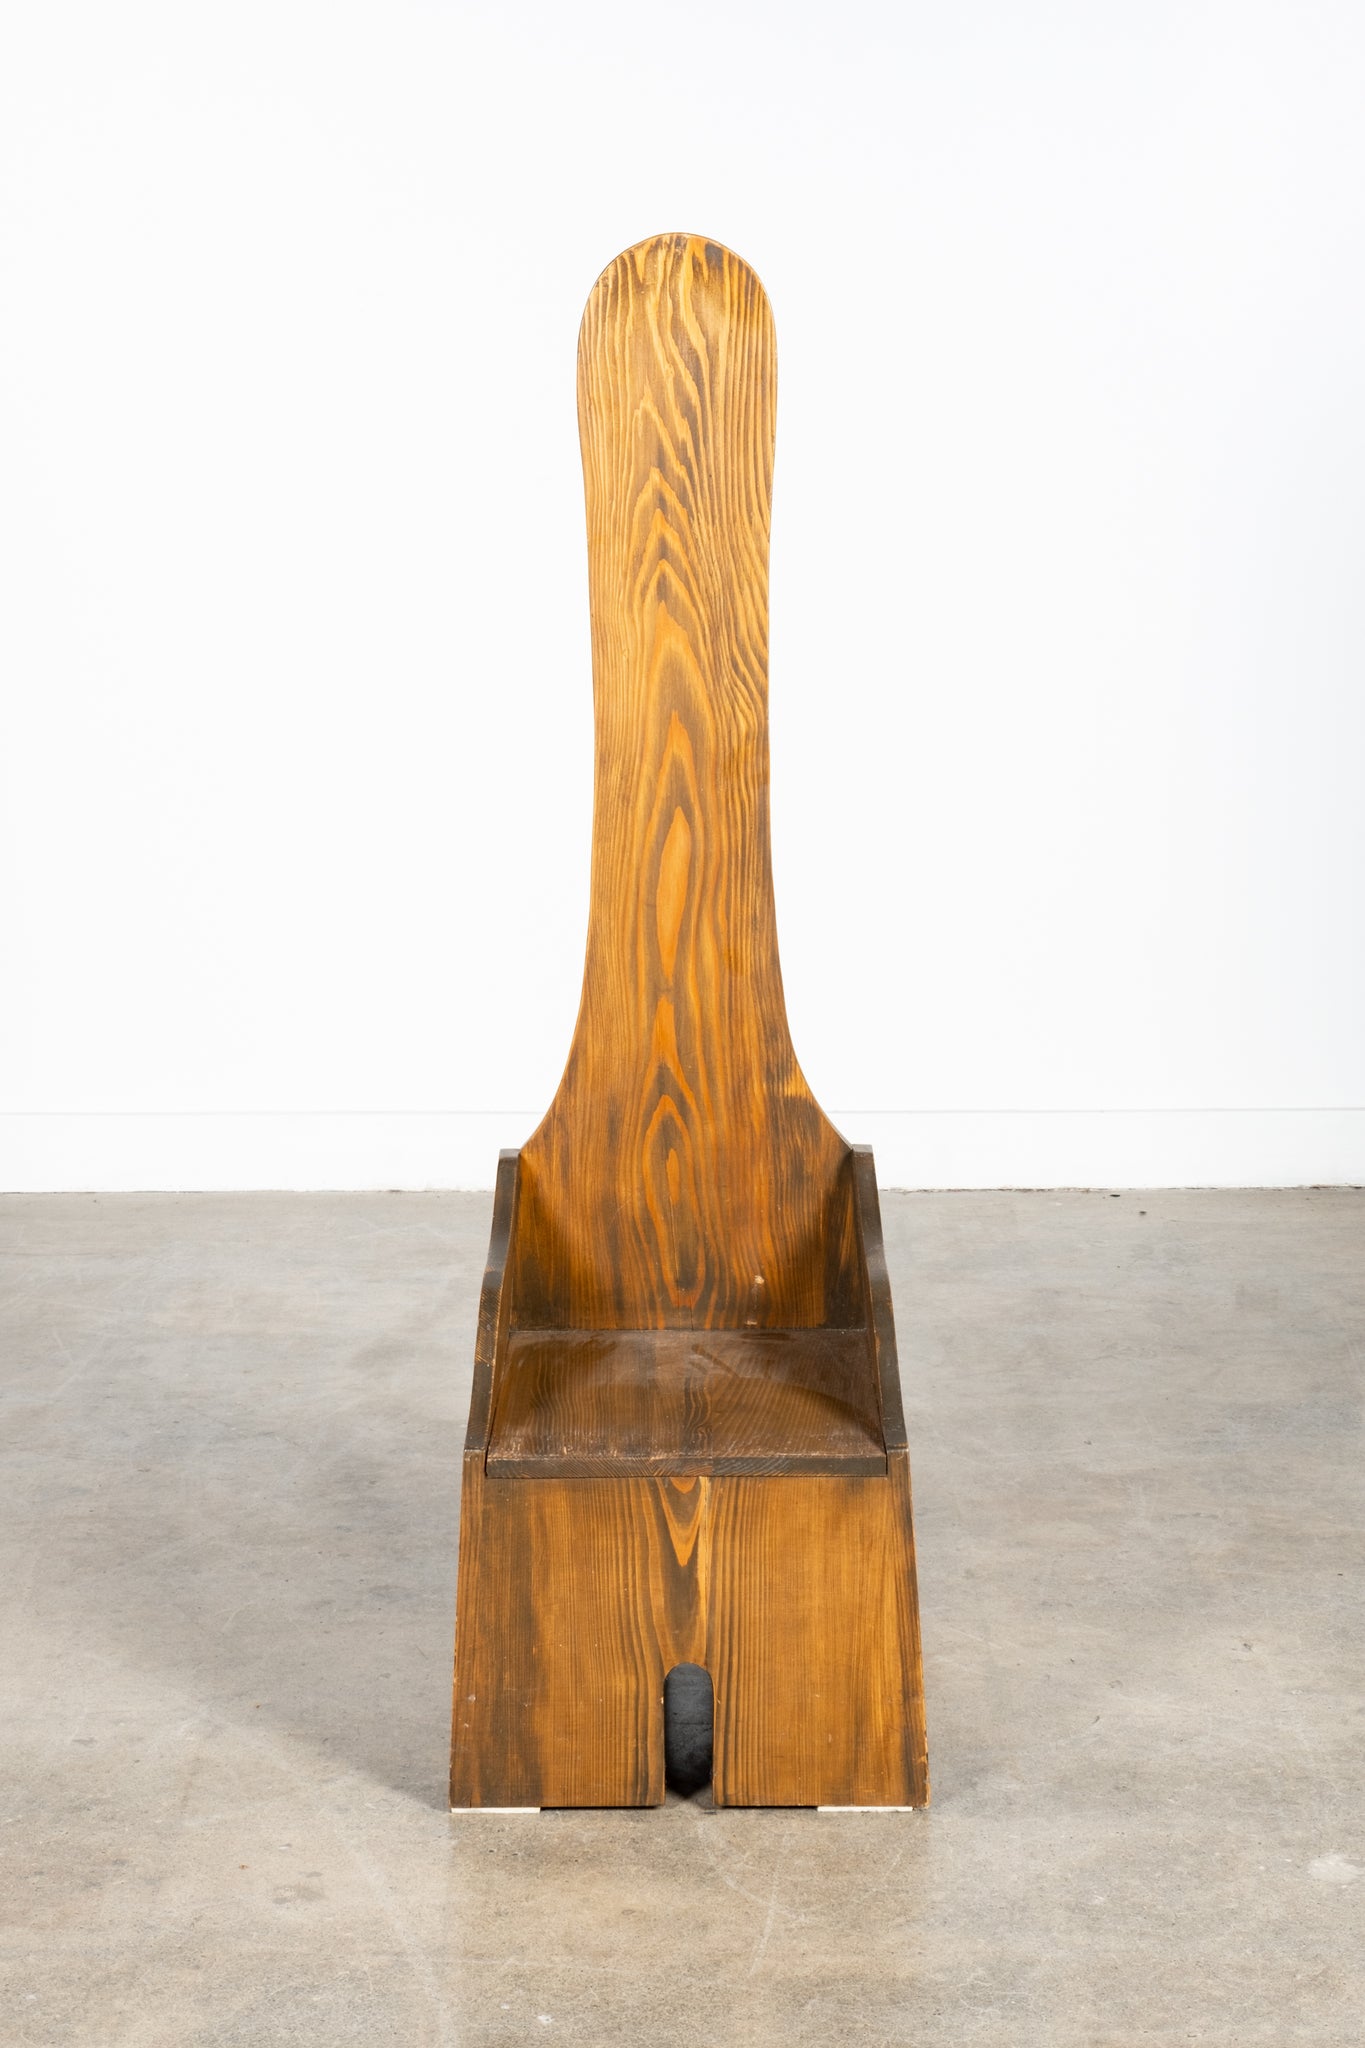 Highback Wood Chair